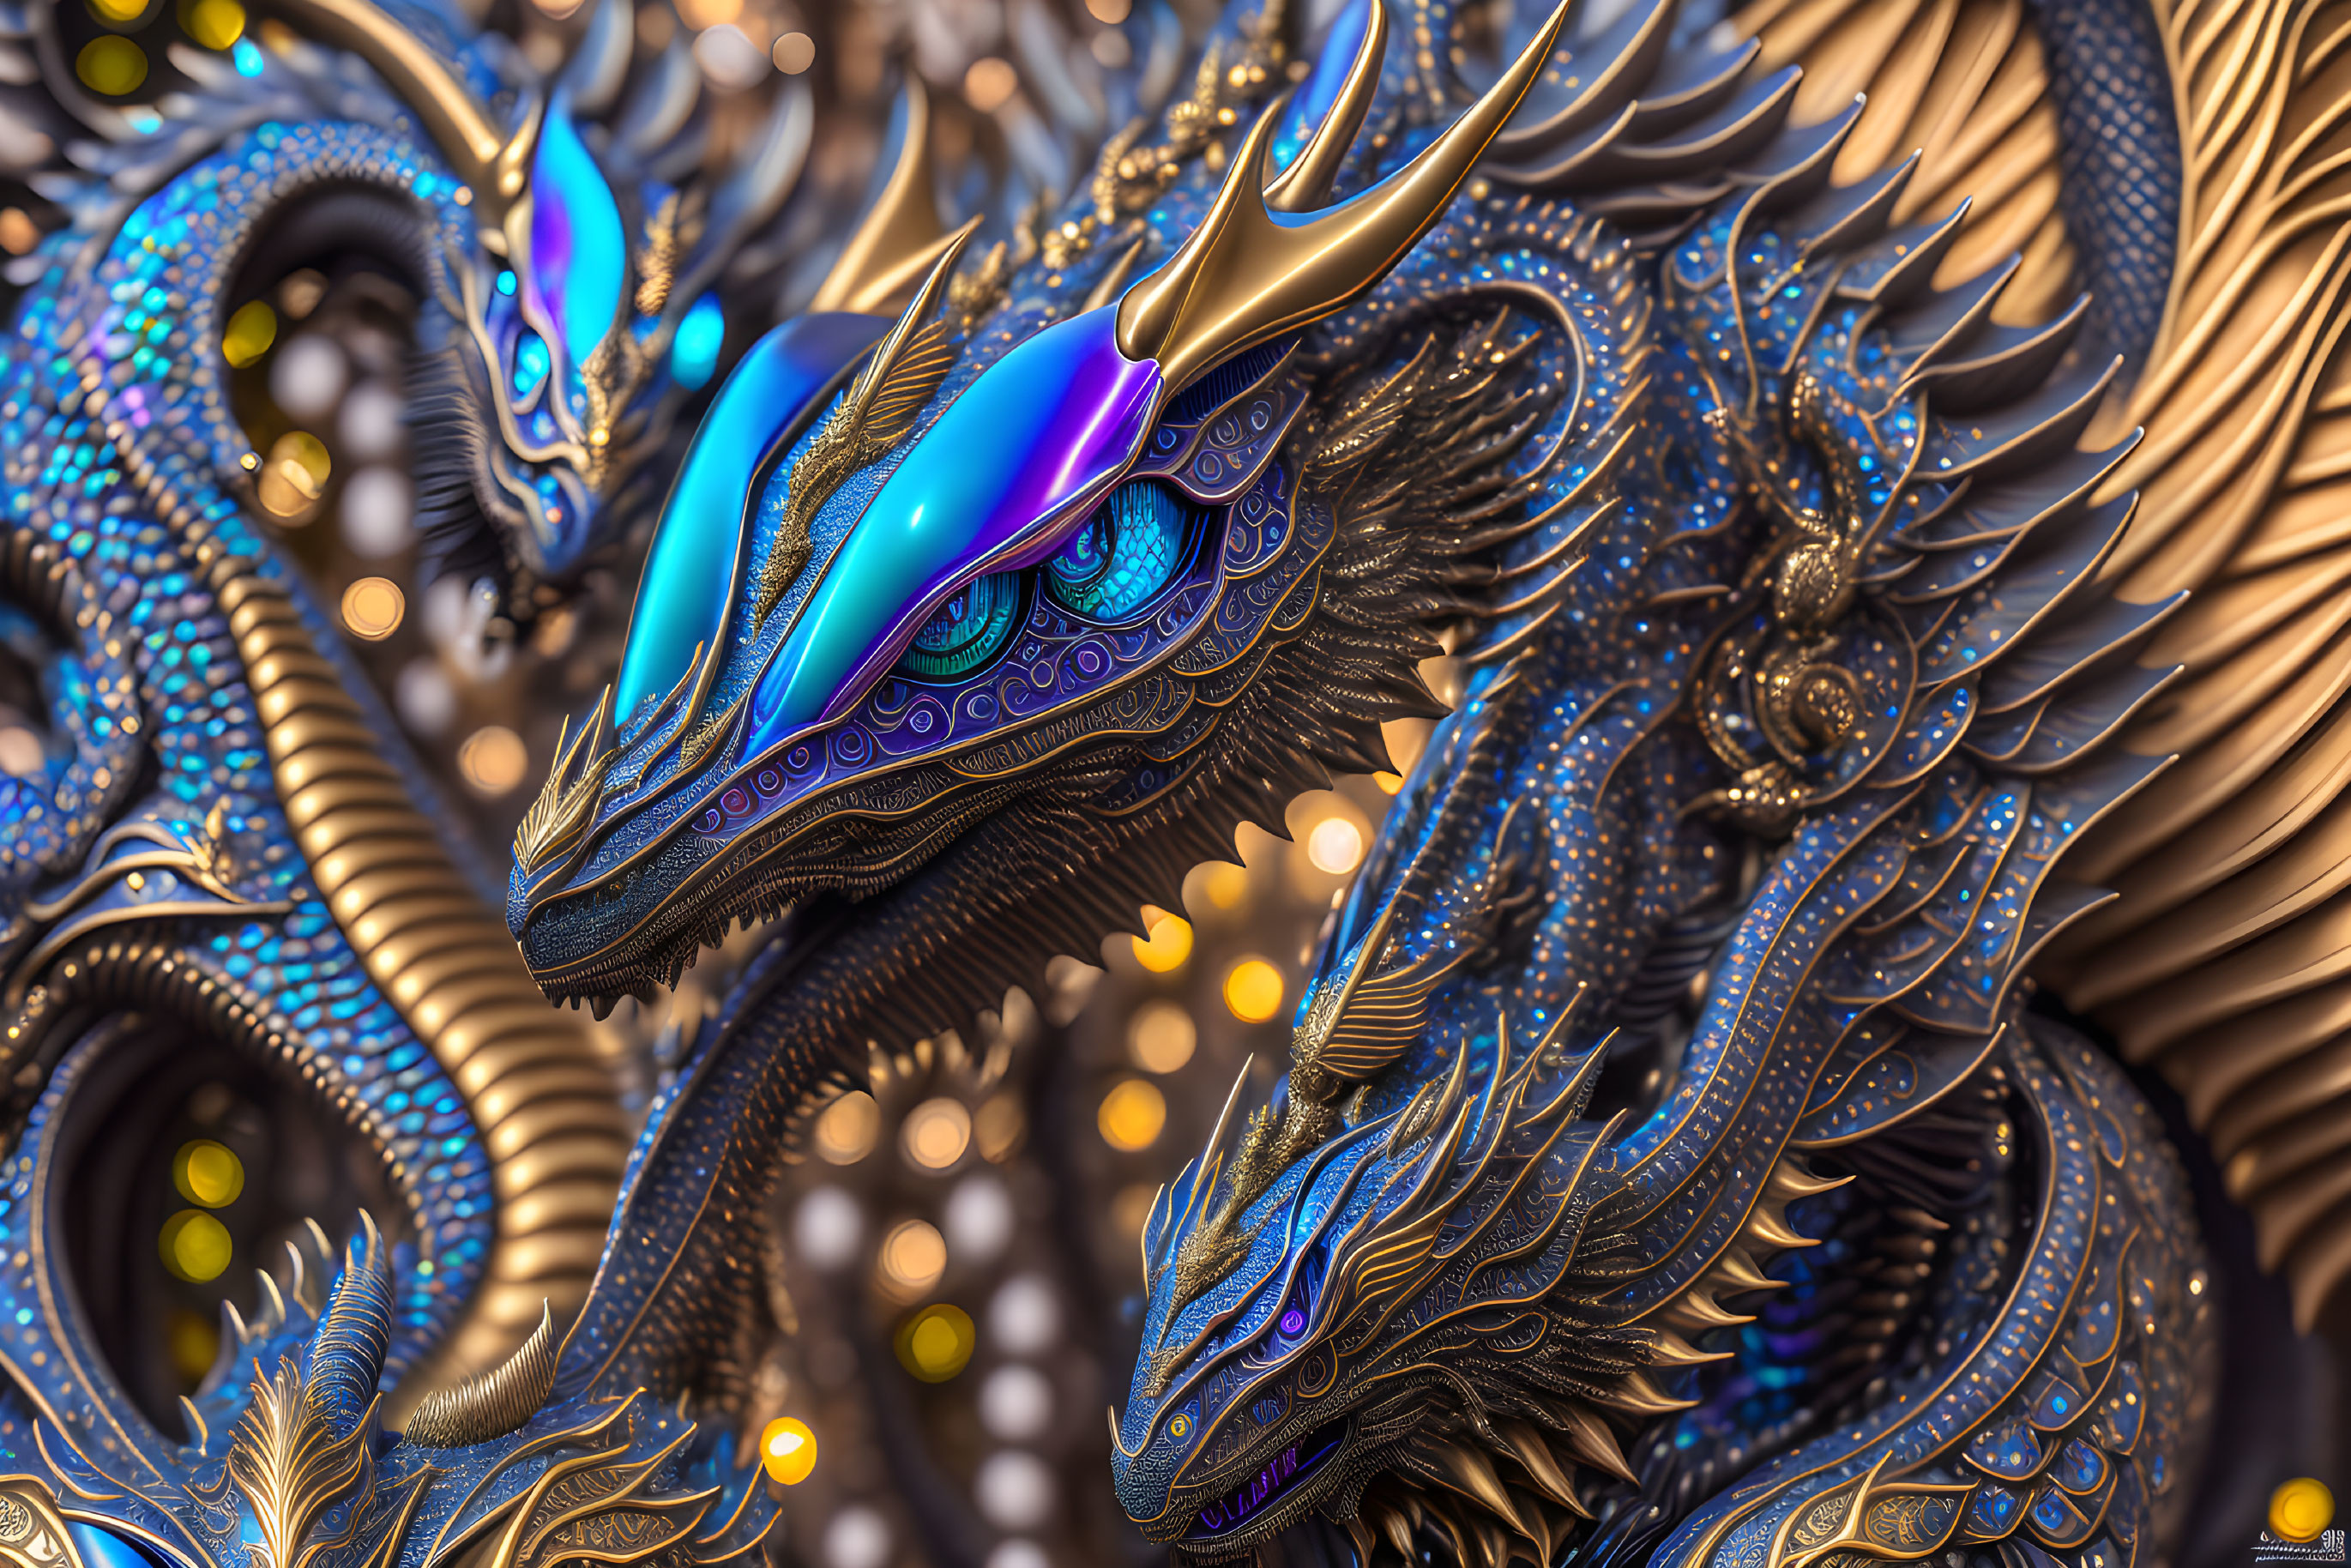 Detailed Metallic Blue Dragon Artwork with Golden Orb Backdrop